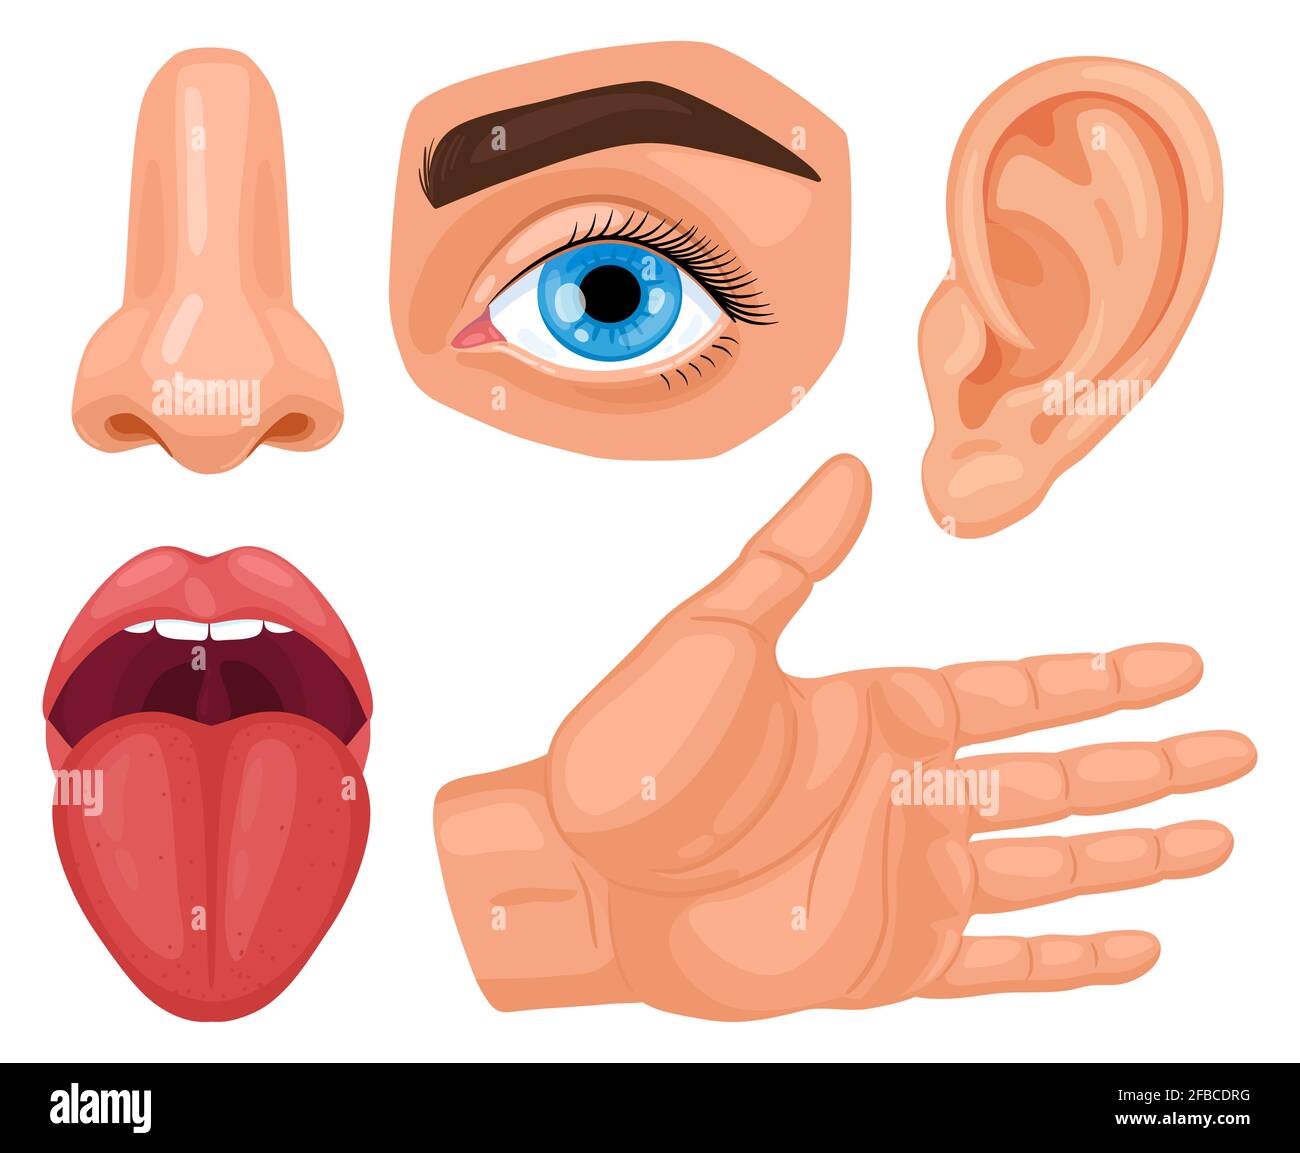 Cartoon human sensory organs. Anatomy human senses, skin touch, hearing,  eyes vision, taste tongue and nose smell vector illustration set. Biology  Stock Vector Image & Art - Alamy